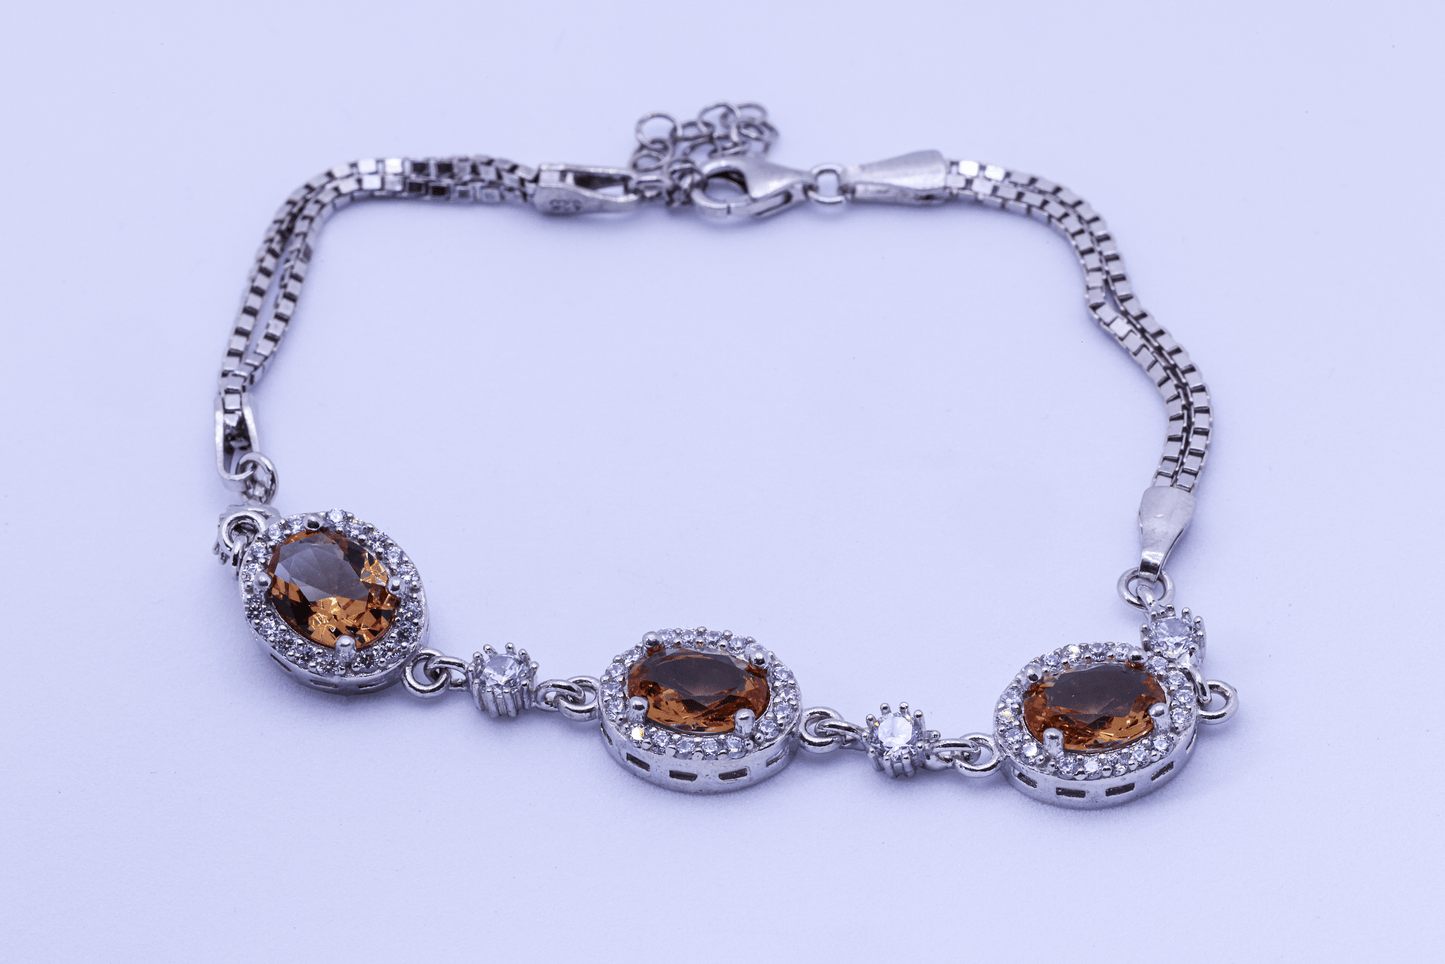 Exotic Brown Stone Bracelet - Handcrafted Elegance for Effortless Style | 7g, 20cm